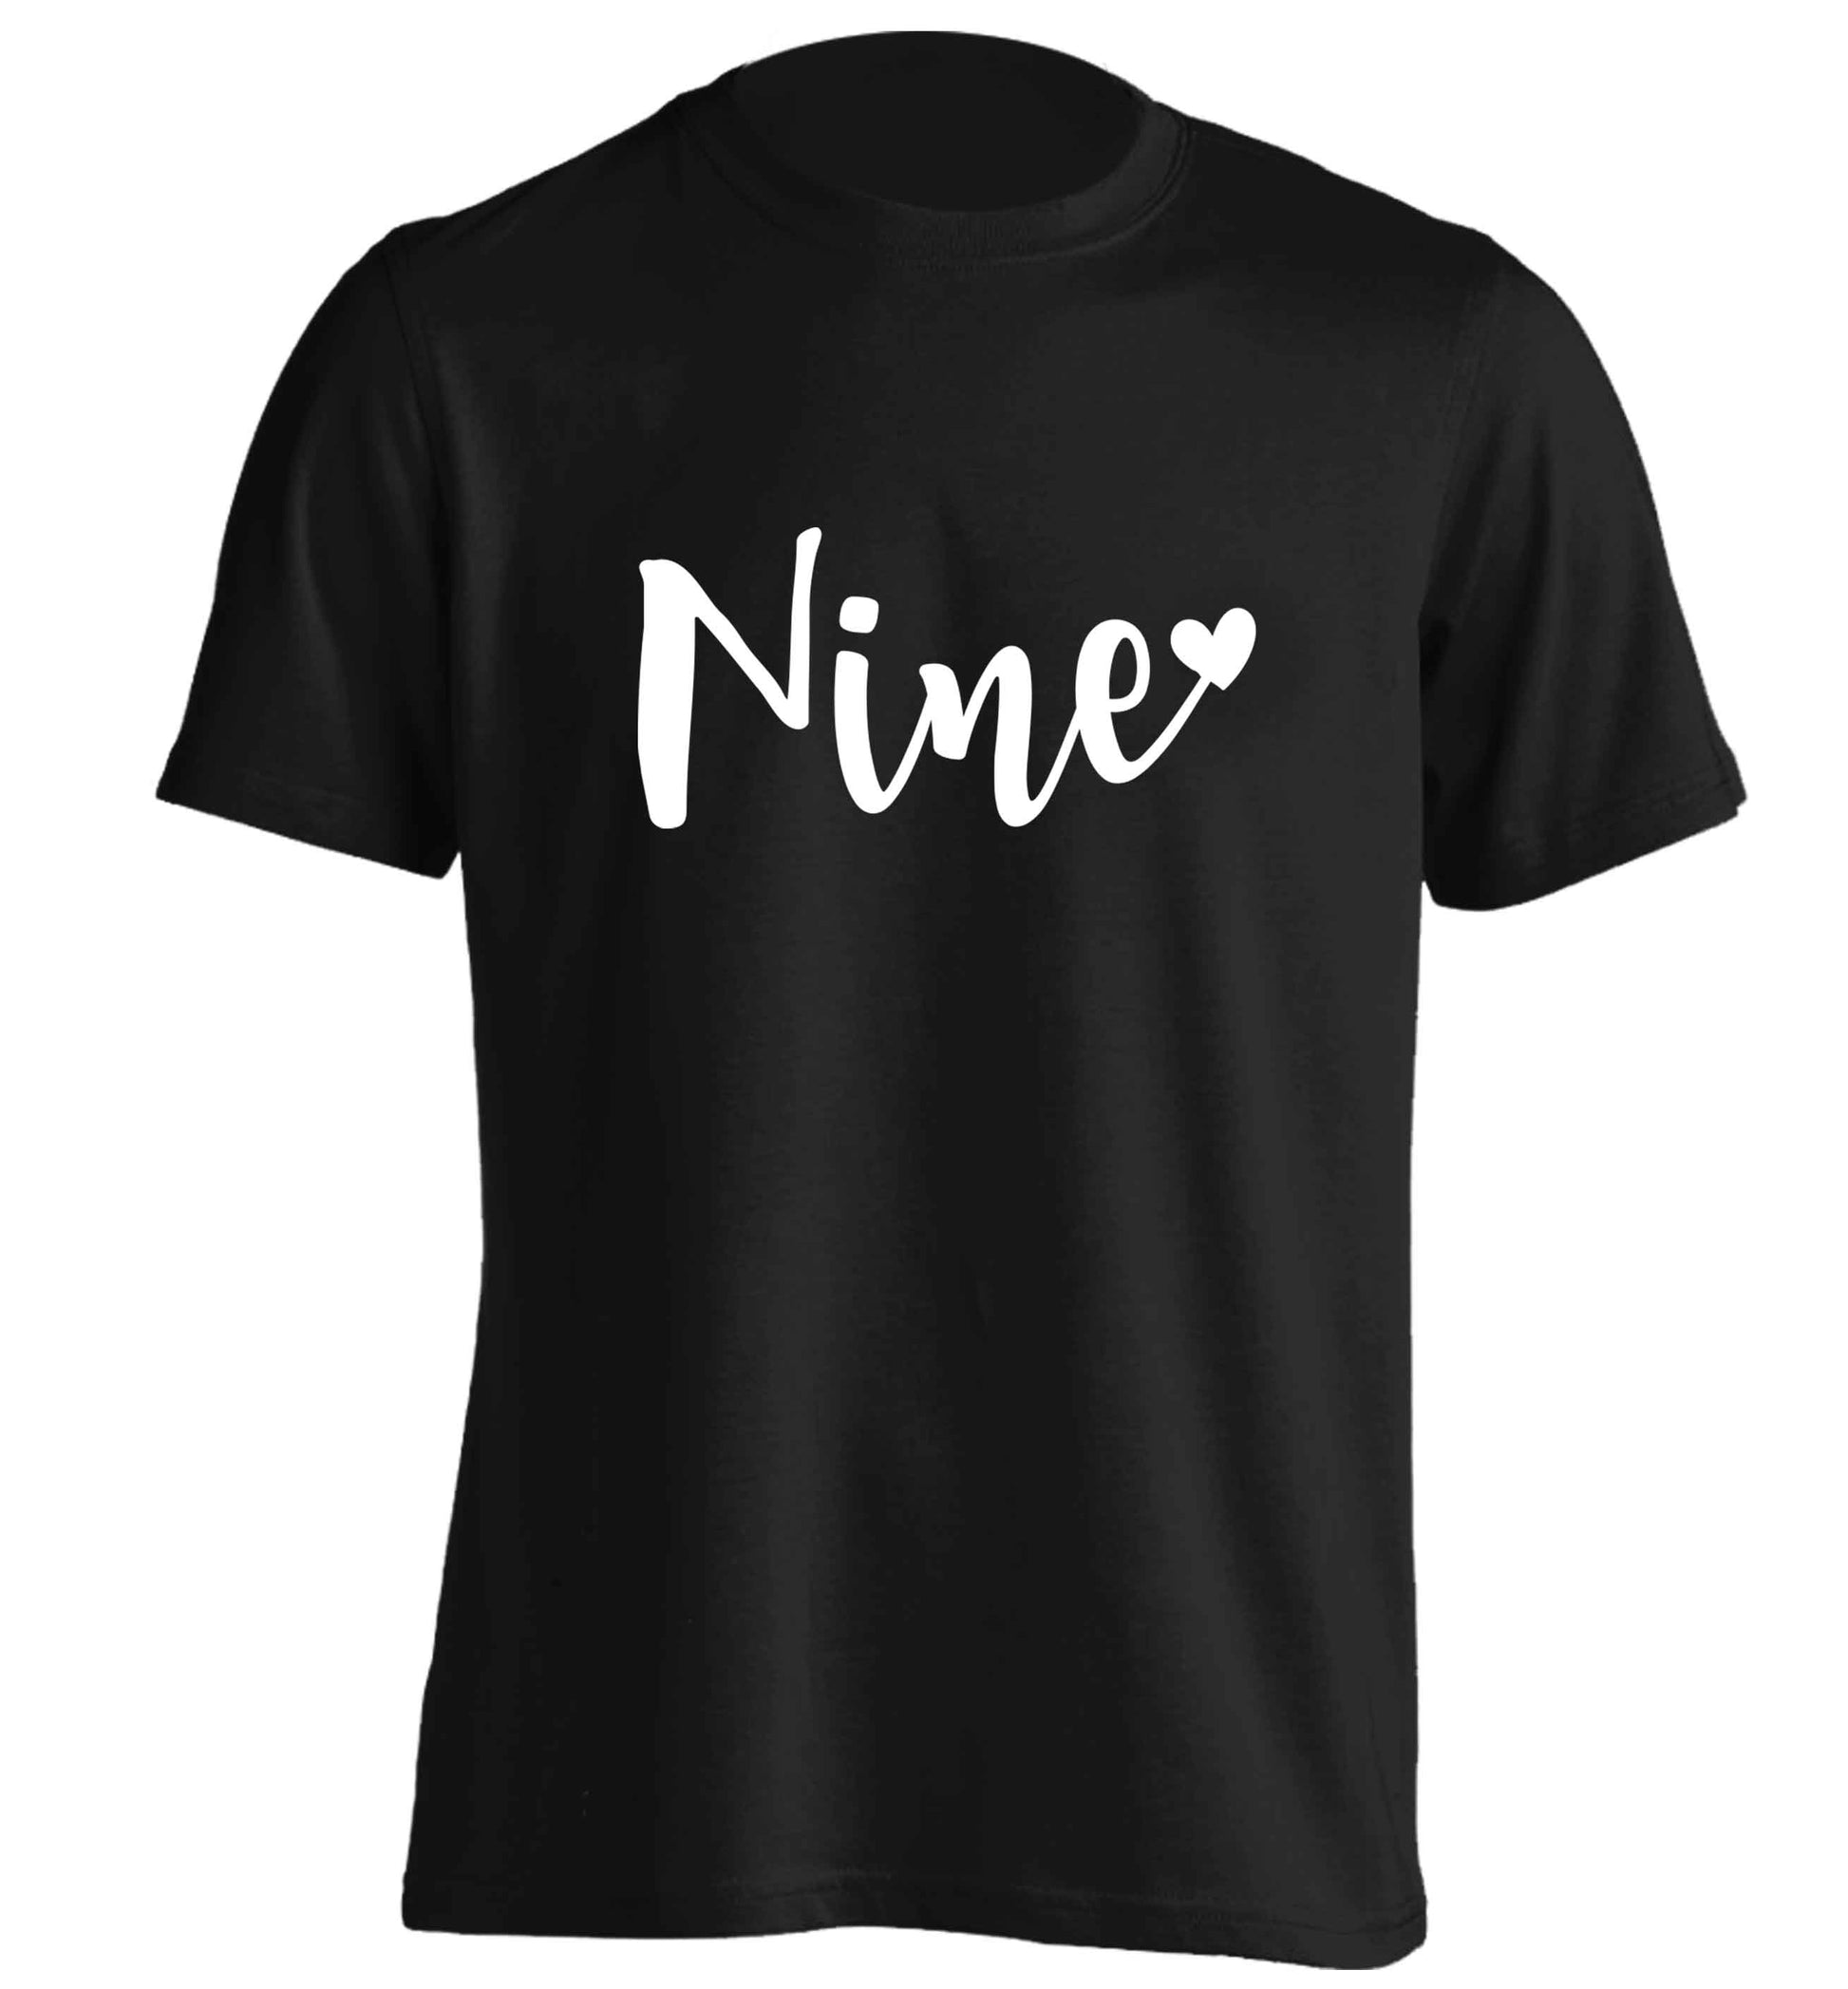 Nine and heart adults unisex black Tshirt 2XL